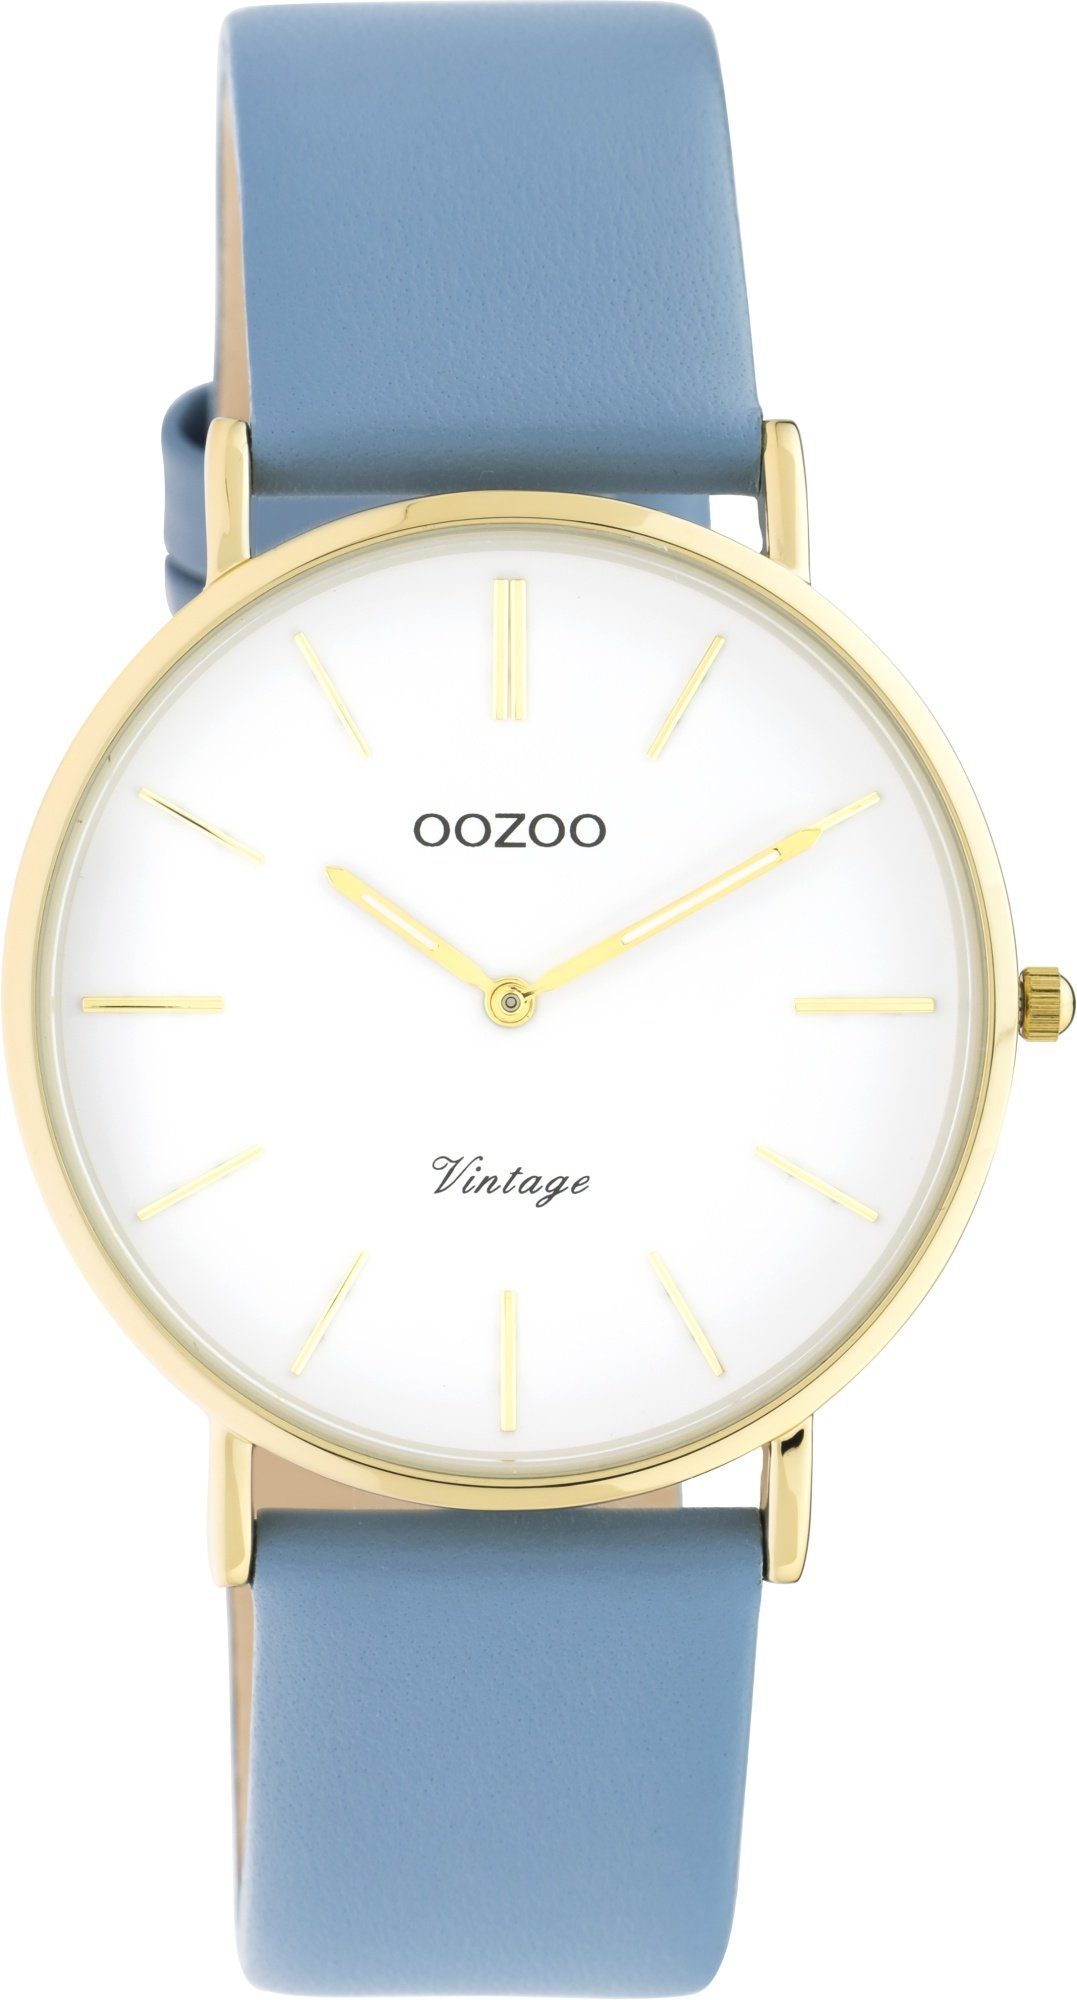 OOZOO Armbanduhren online kaufen | OTTO